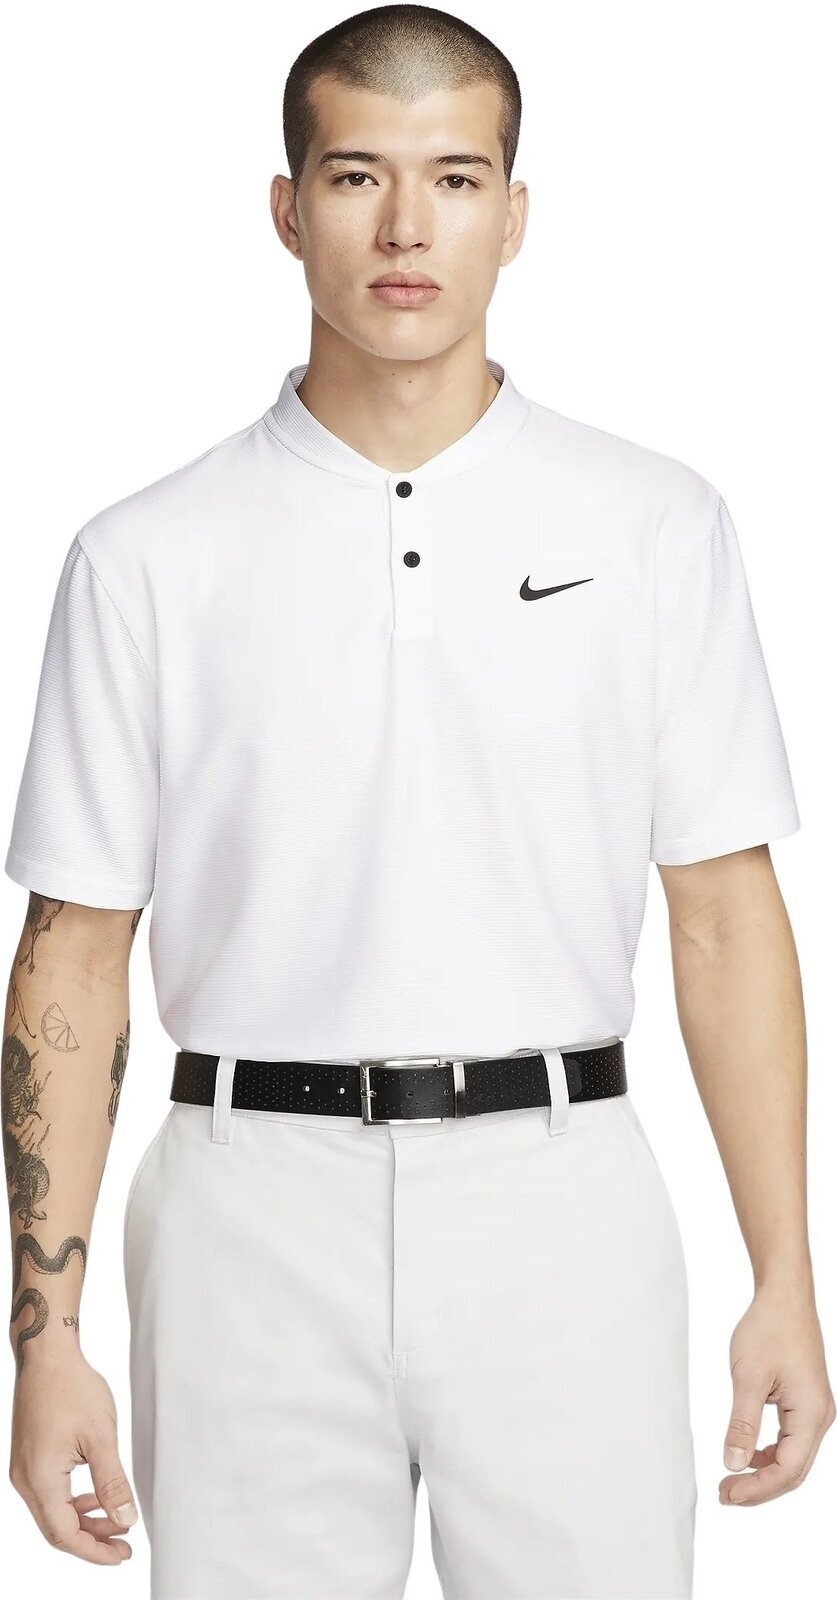 Polo Shirt Nike Dri-Fit Victory Texture Mens Polo White/Black L Polo Shirt